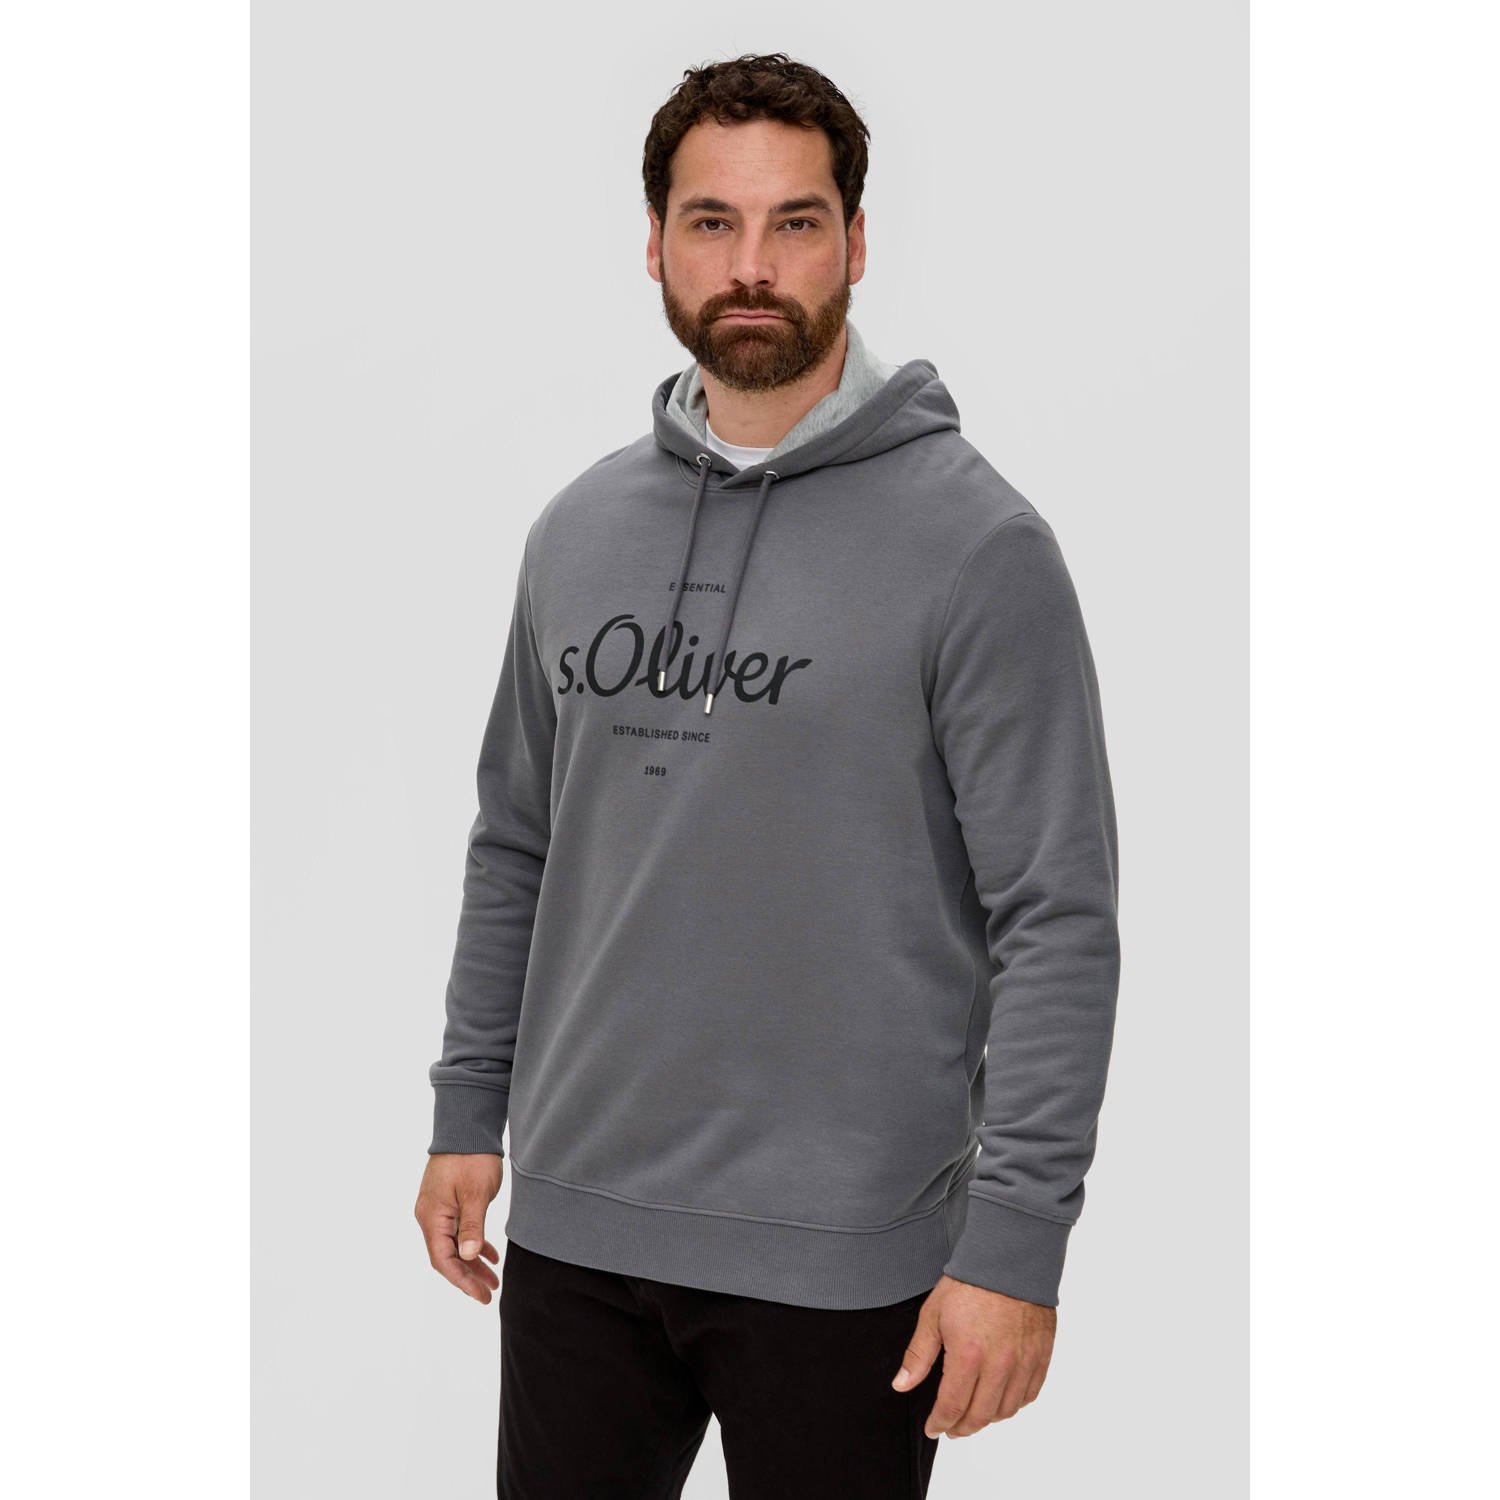 S.Oliver Big Size hoodie Plus Size met printopdruk antraciet